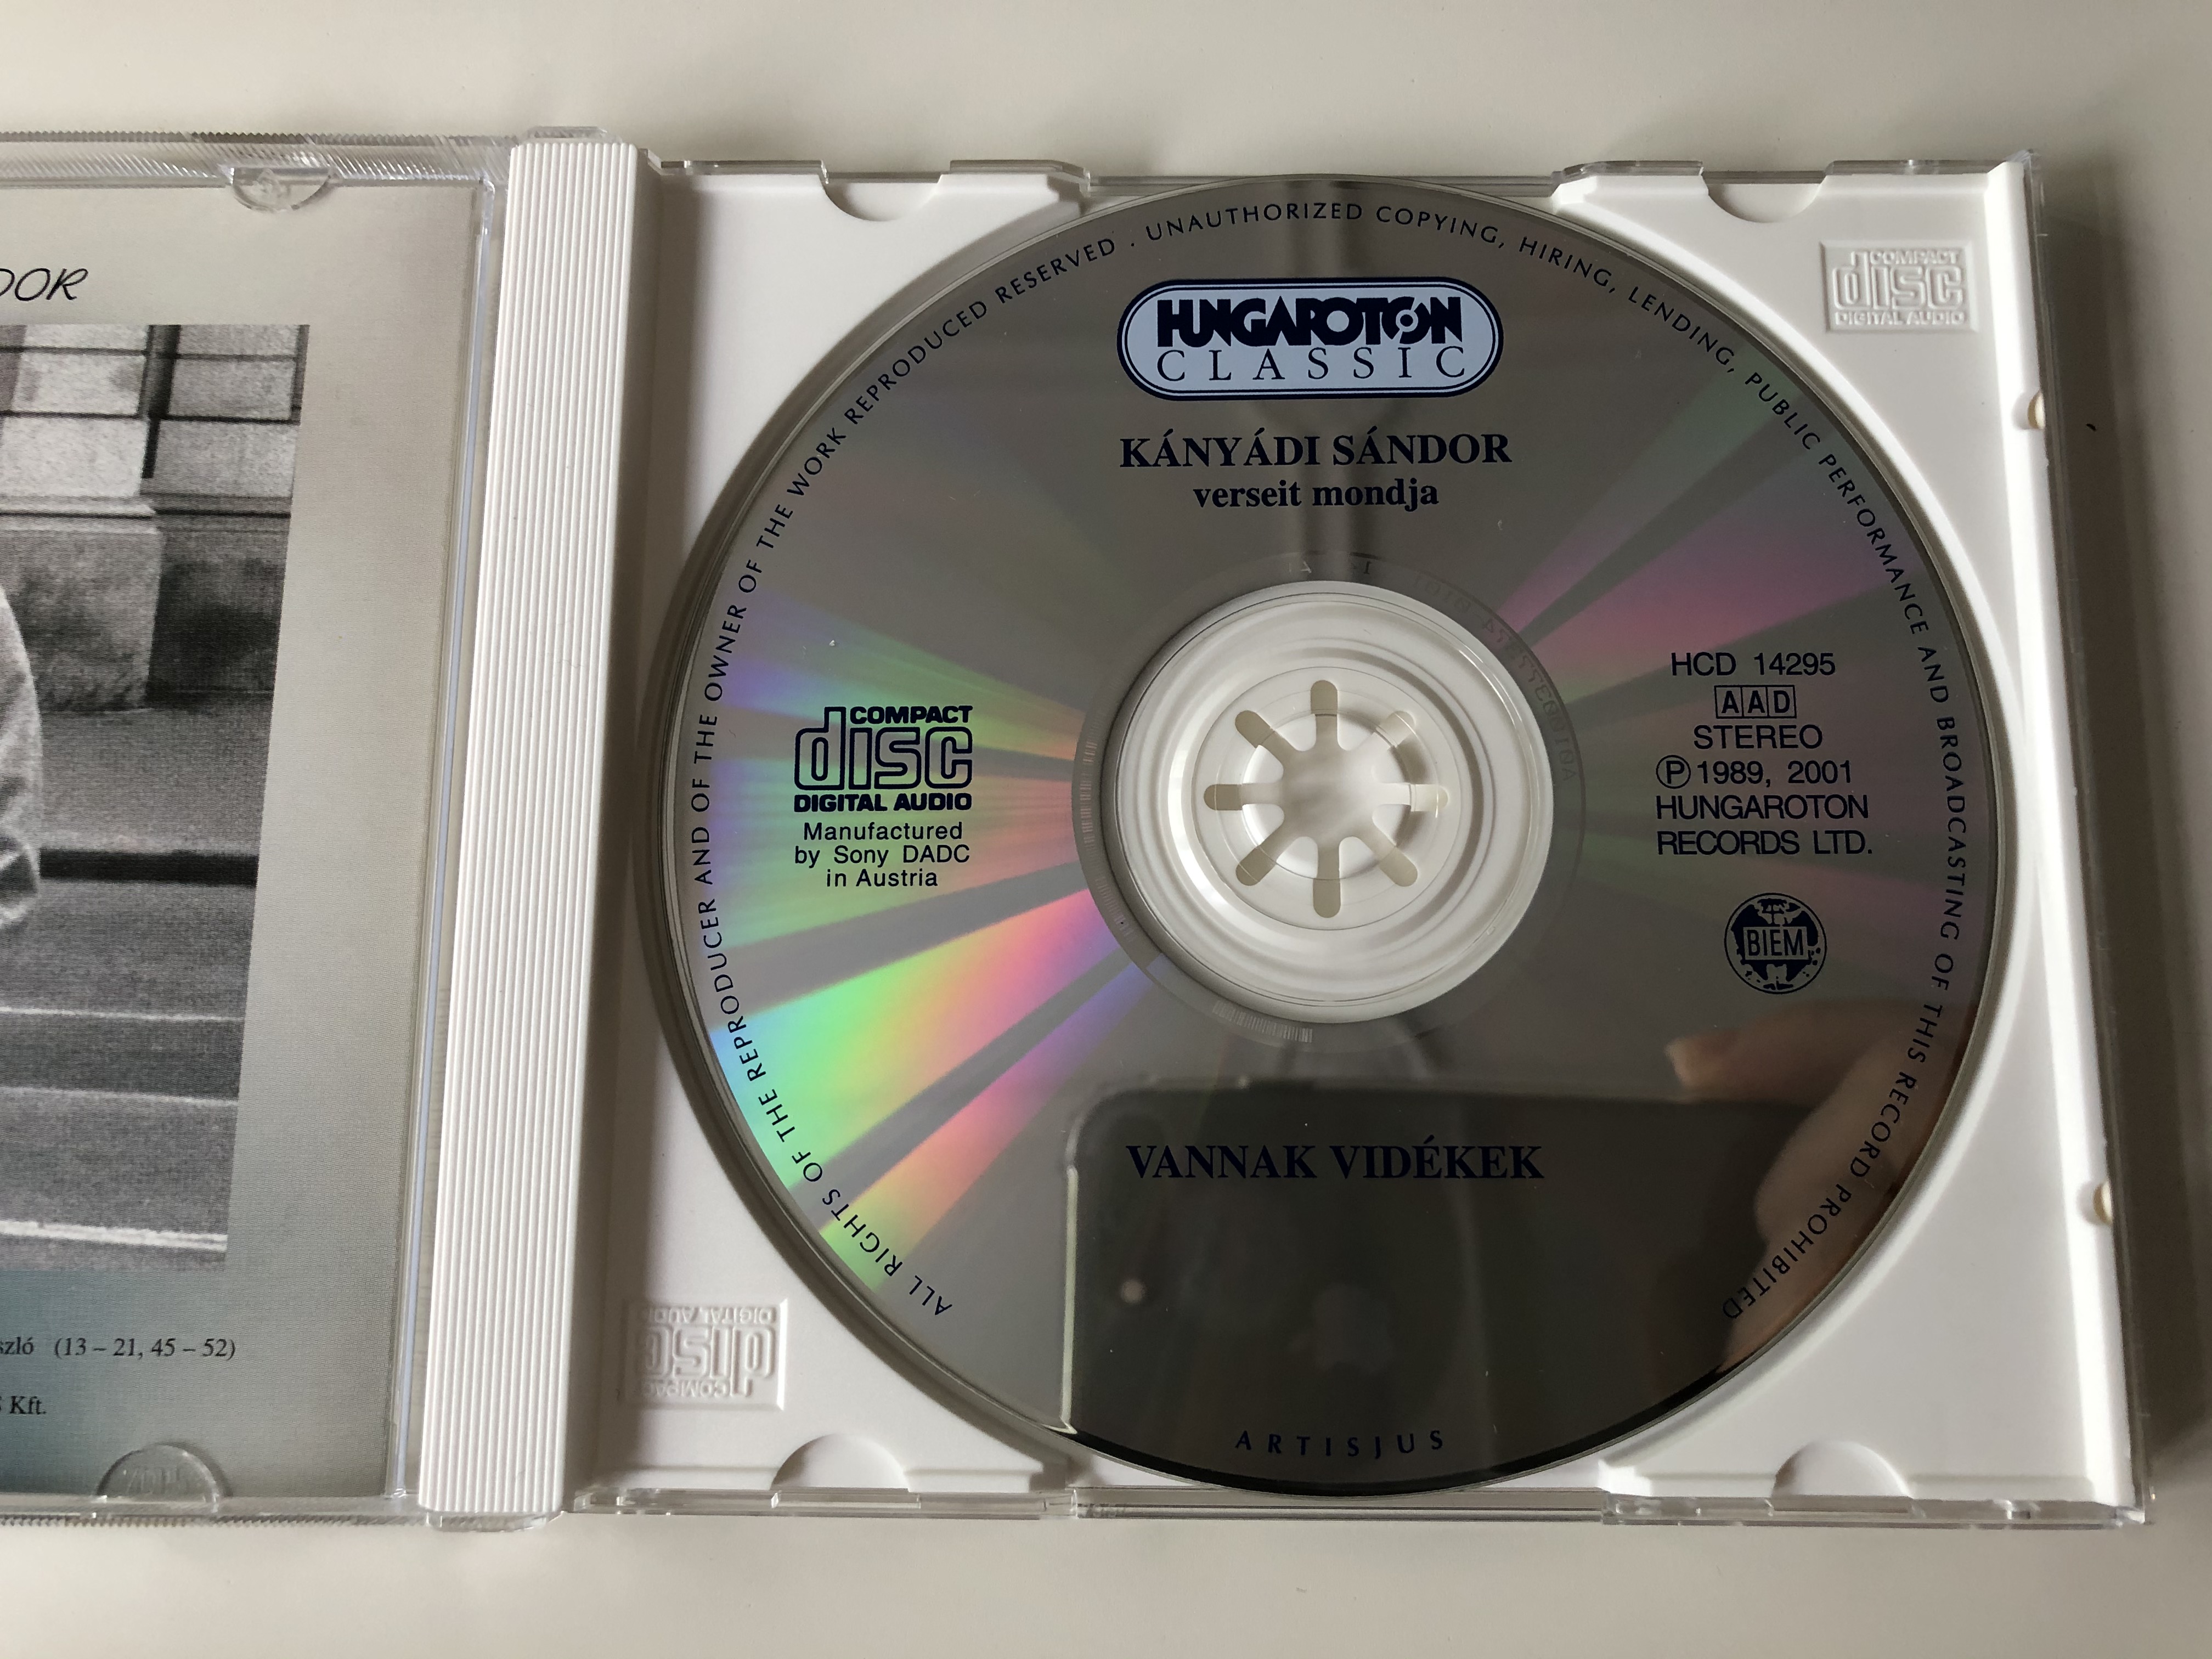 k-ny-di-s-ndor-verseit-mondja-vannak-videkek-hungaroton-classic-audio-cd-2001-stereo-hcd-14295-4-.jpg